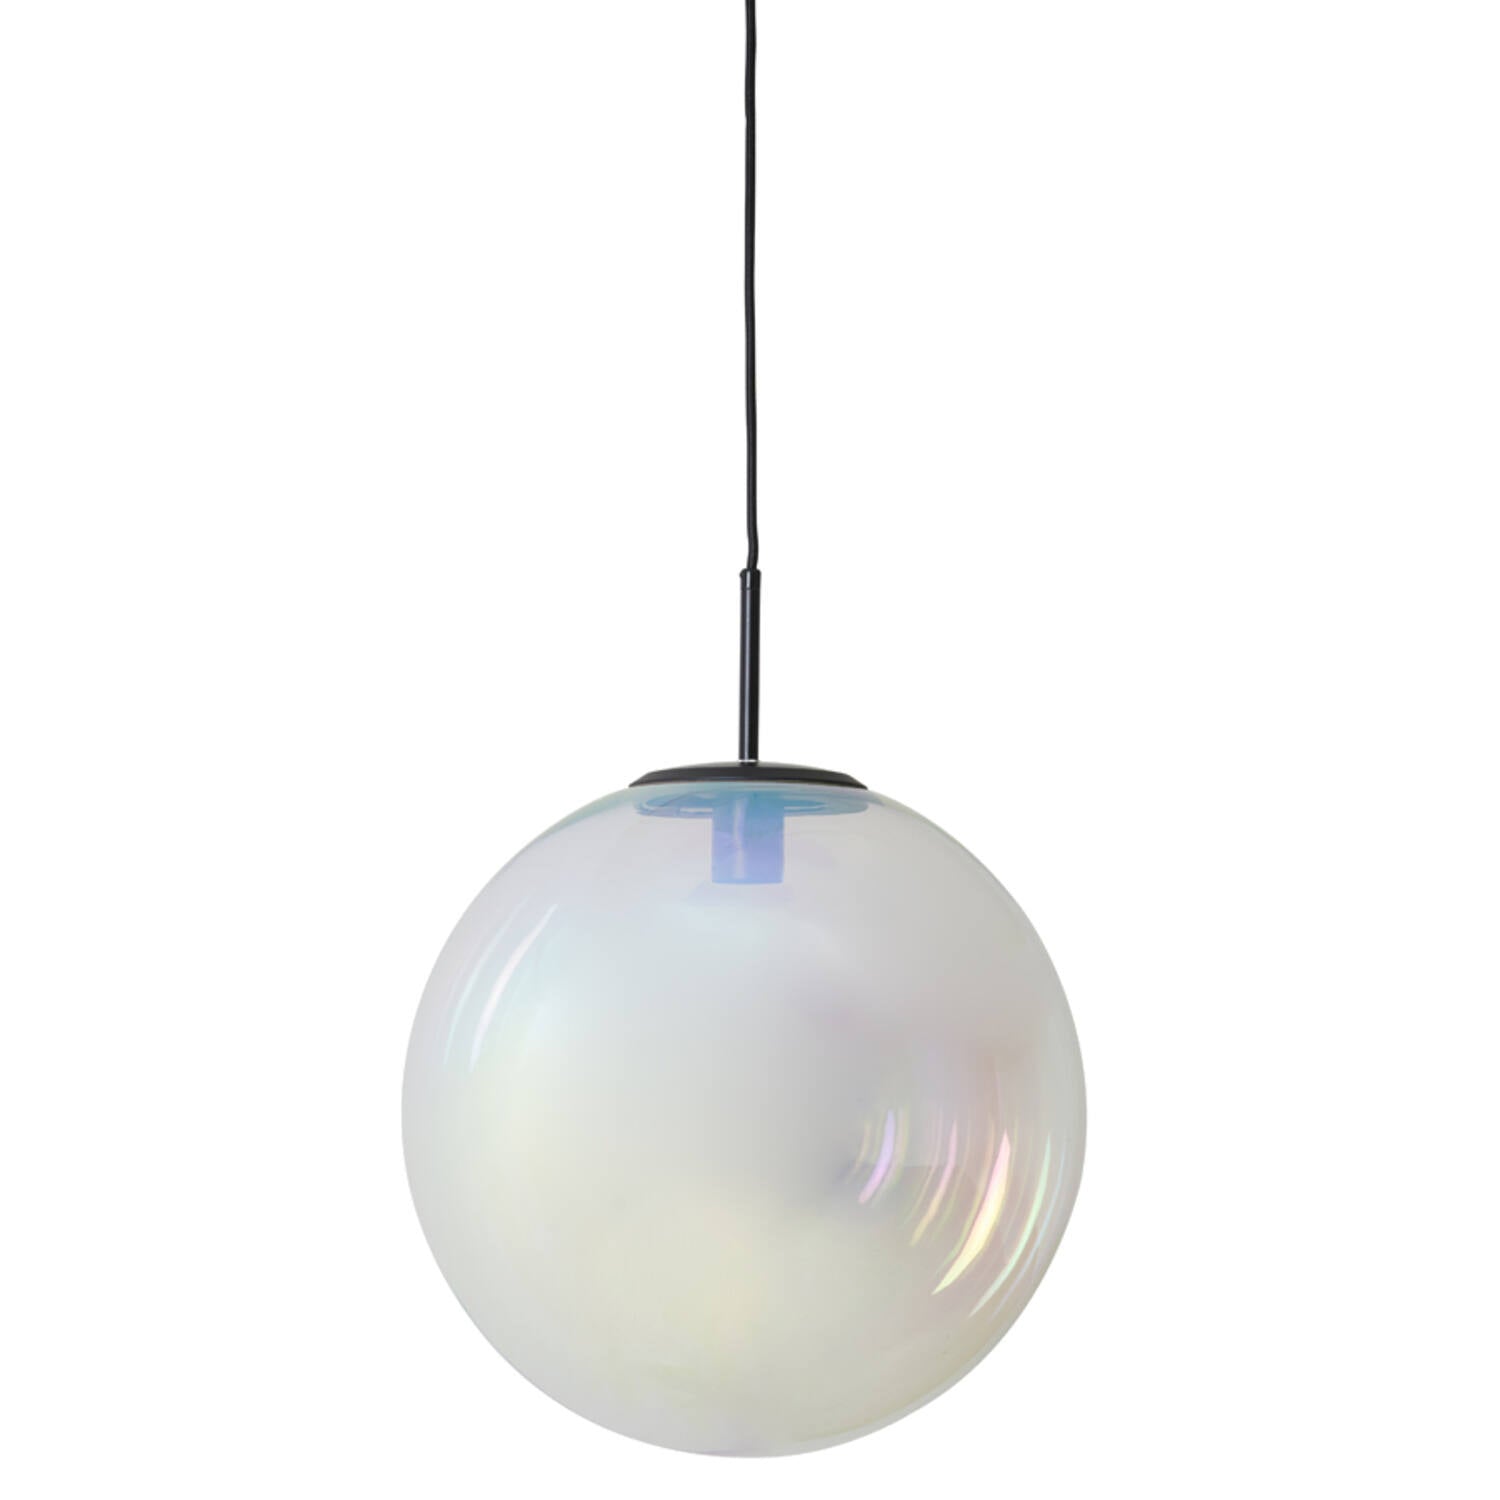 Medina Small/Medium/Large/X Large Hanging Lamp - Matt White/Clear/Smoked/Rainbow Glass Finish